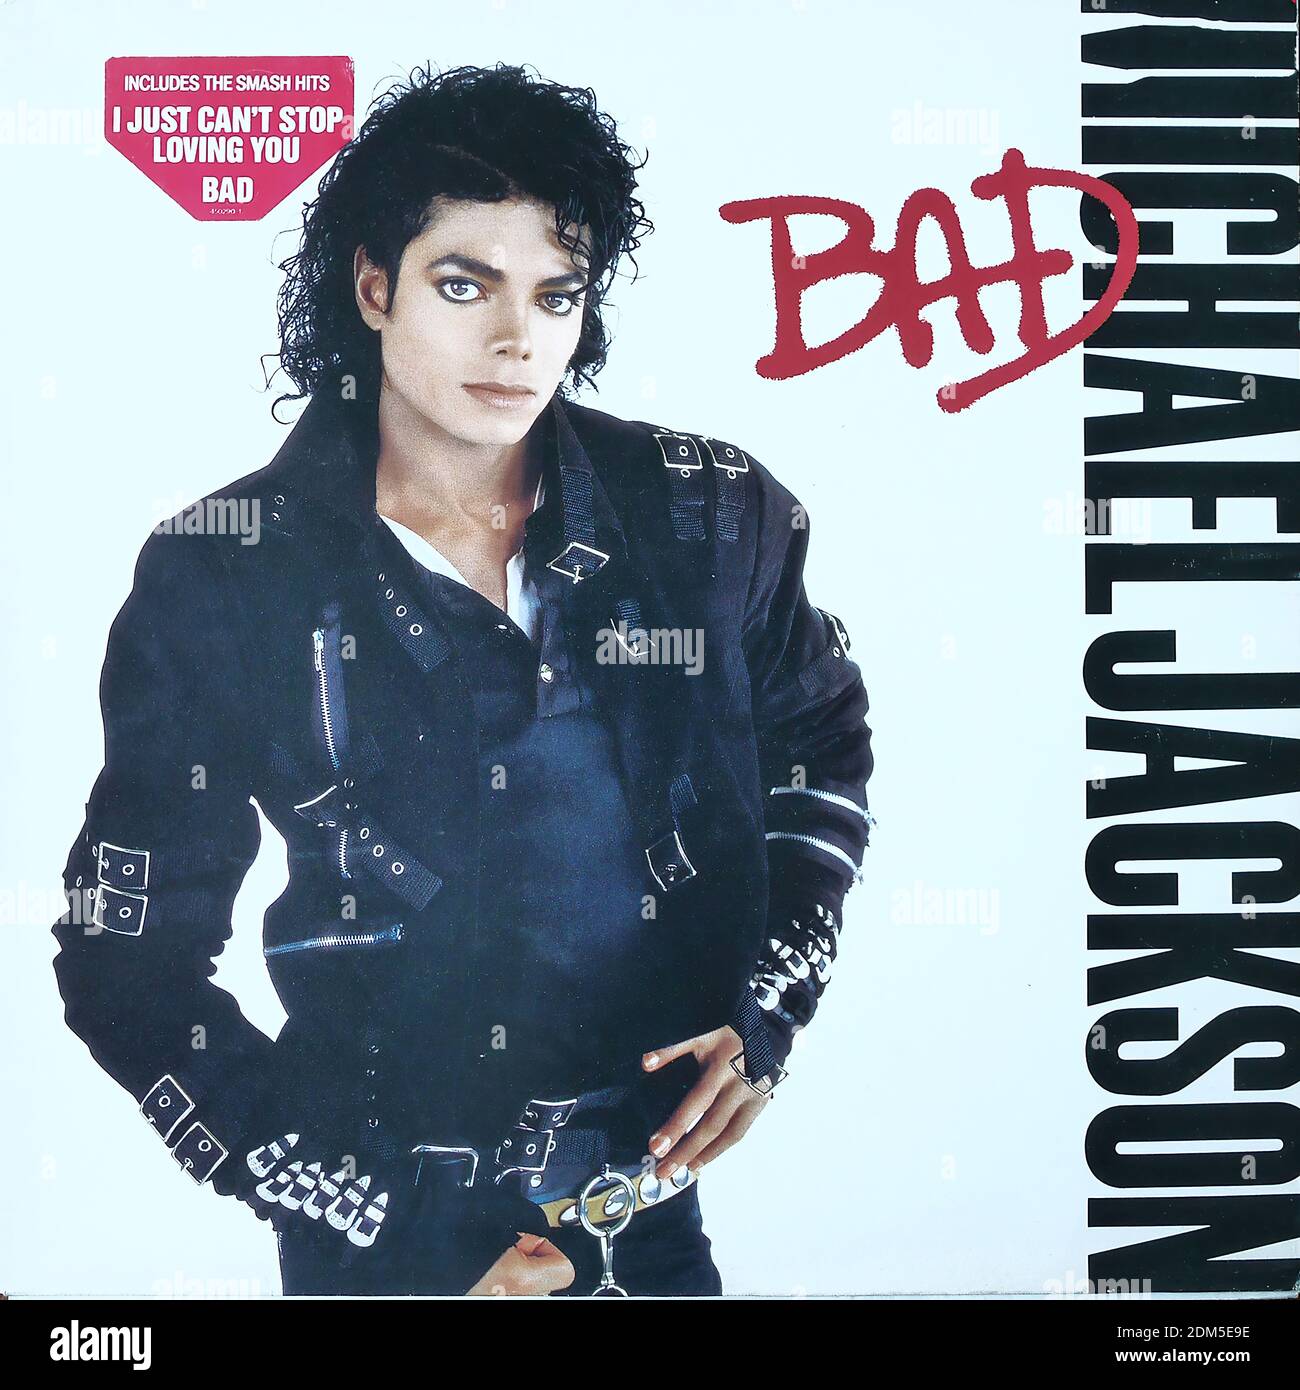 Michael Jackson - Bad - Vintage vinilo album cover Fotografía de stock -  Alamy